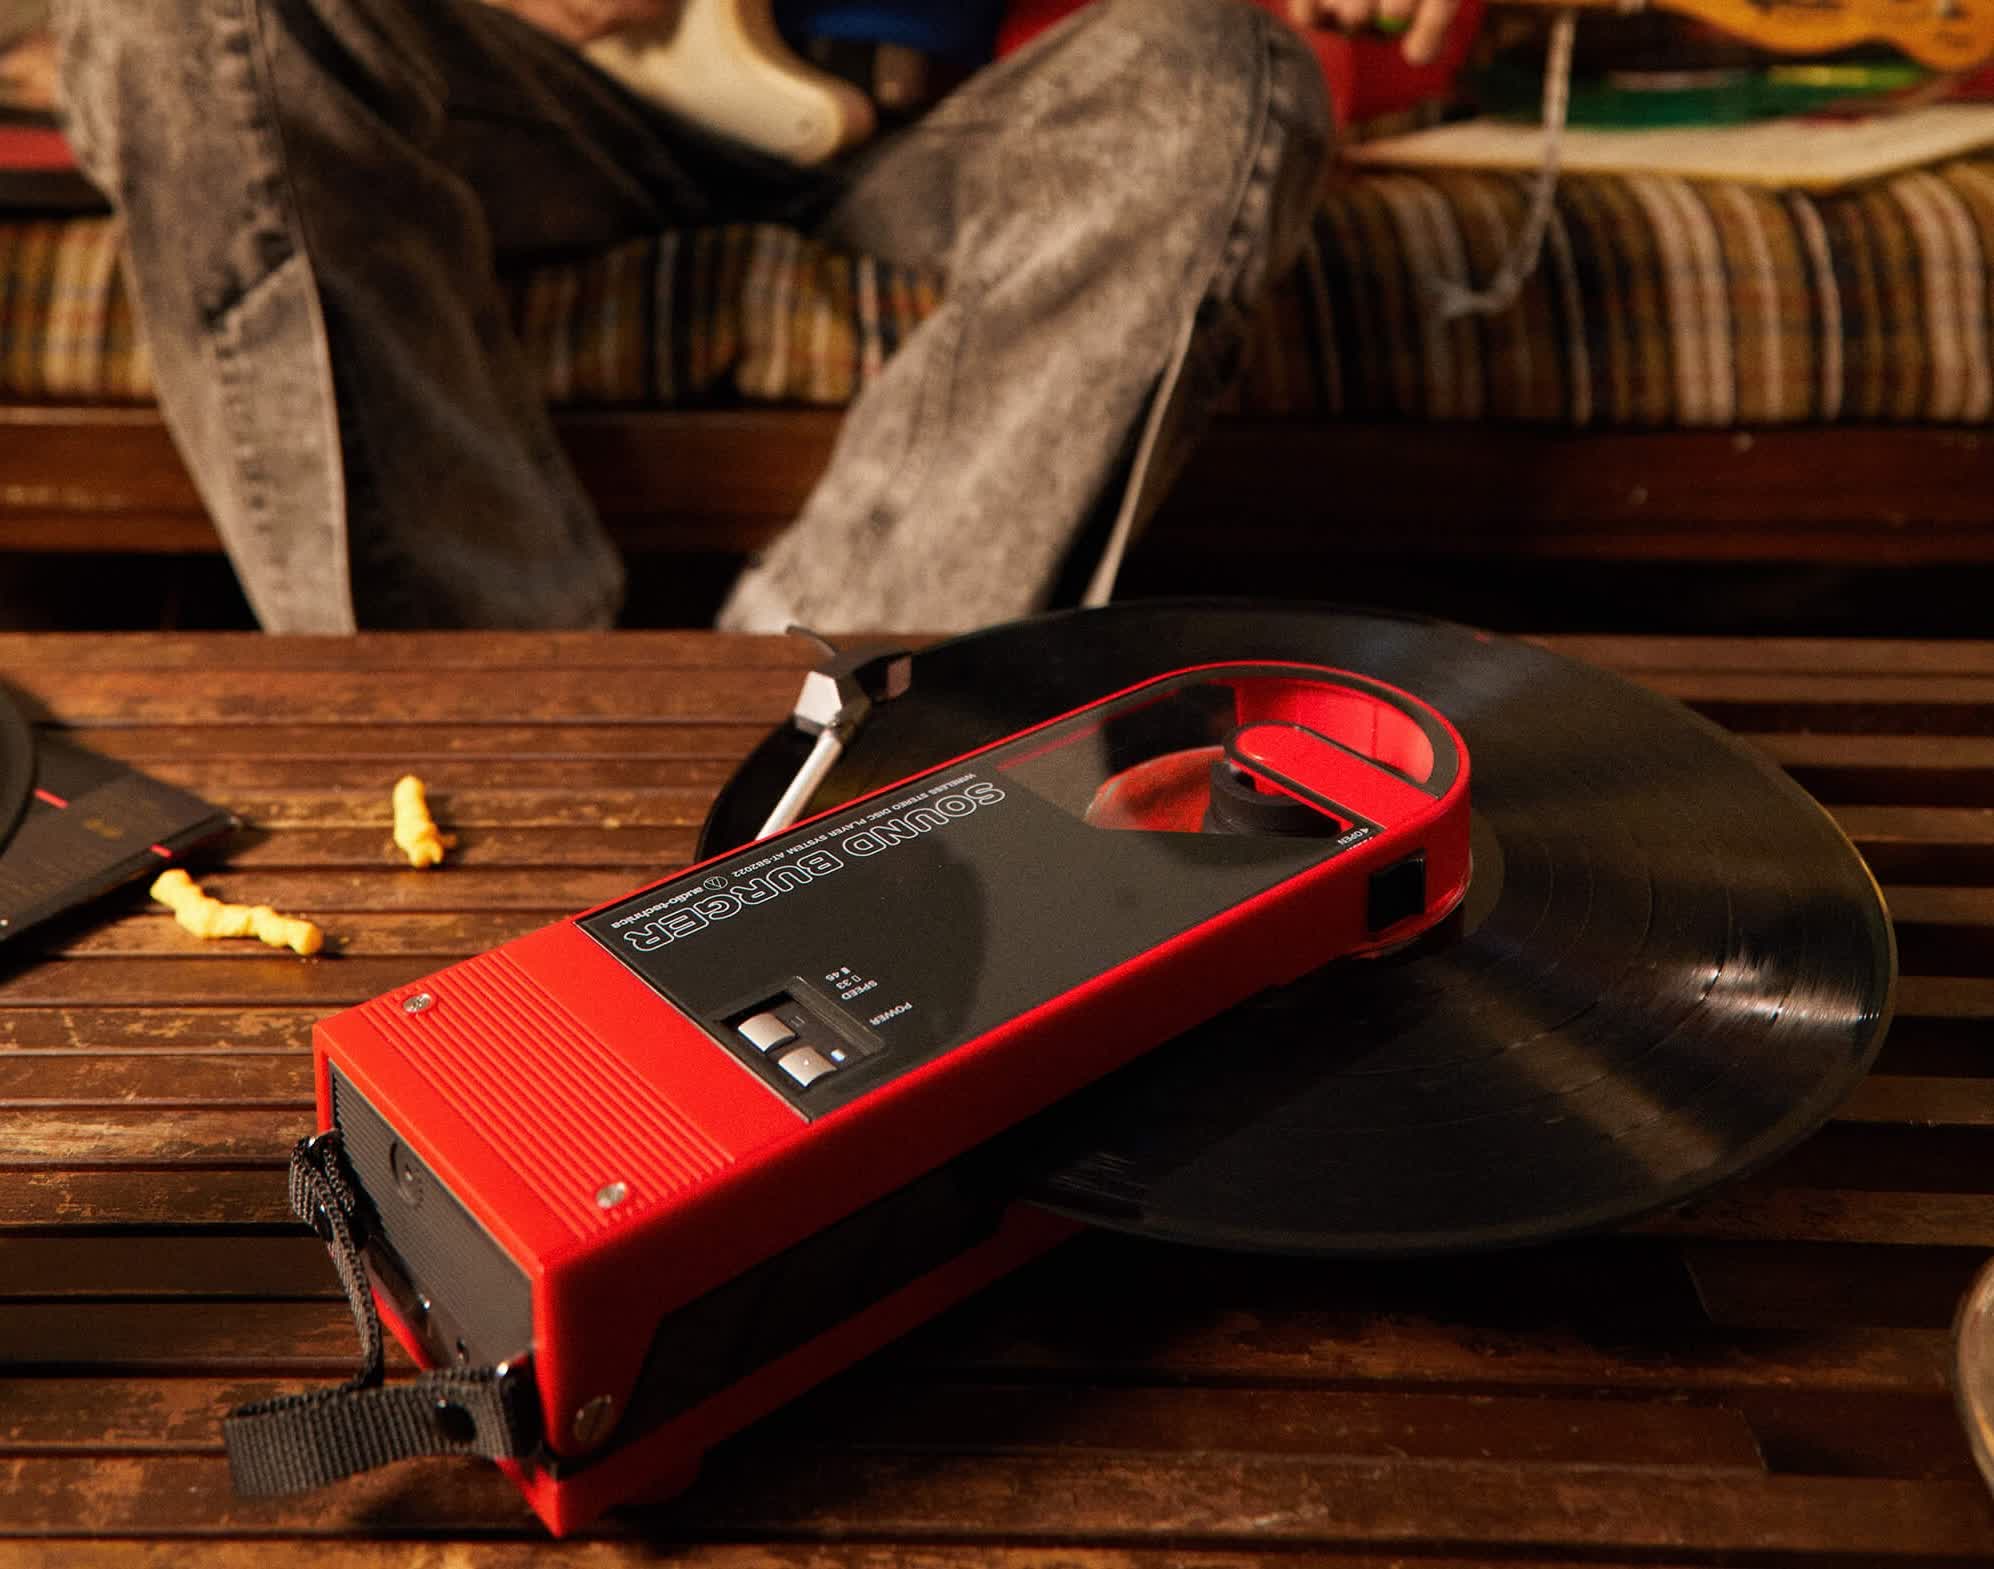 Audio-Technica resurrects iconic Sound Burger portable record player